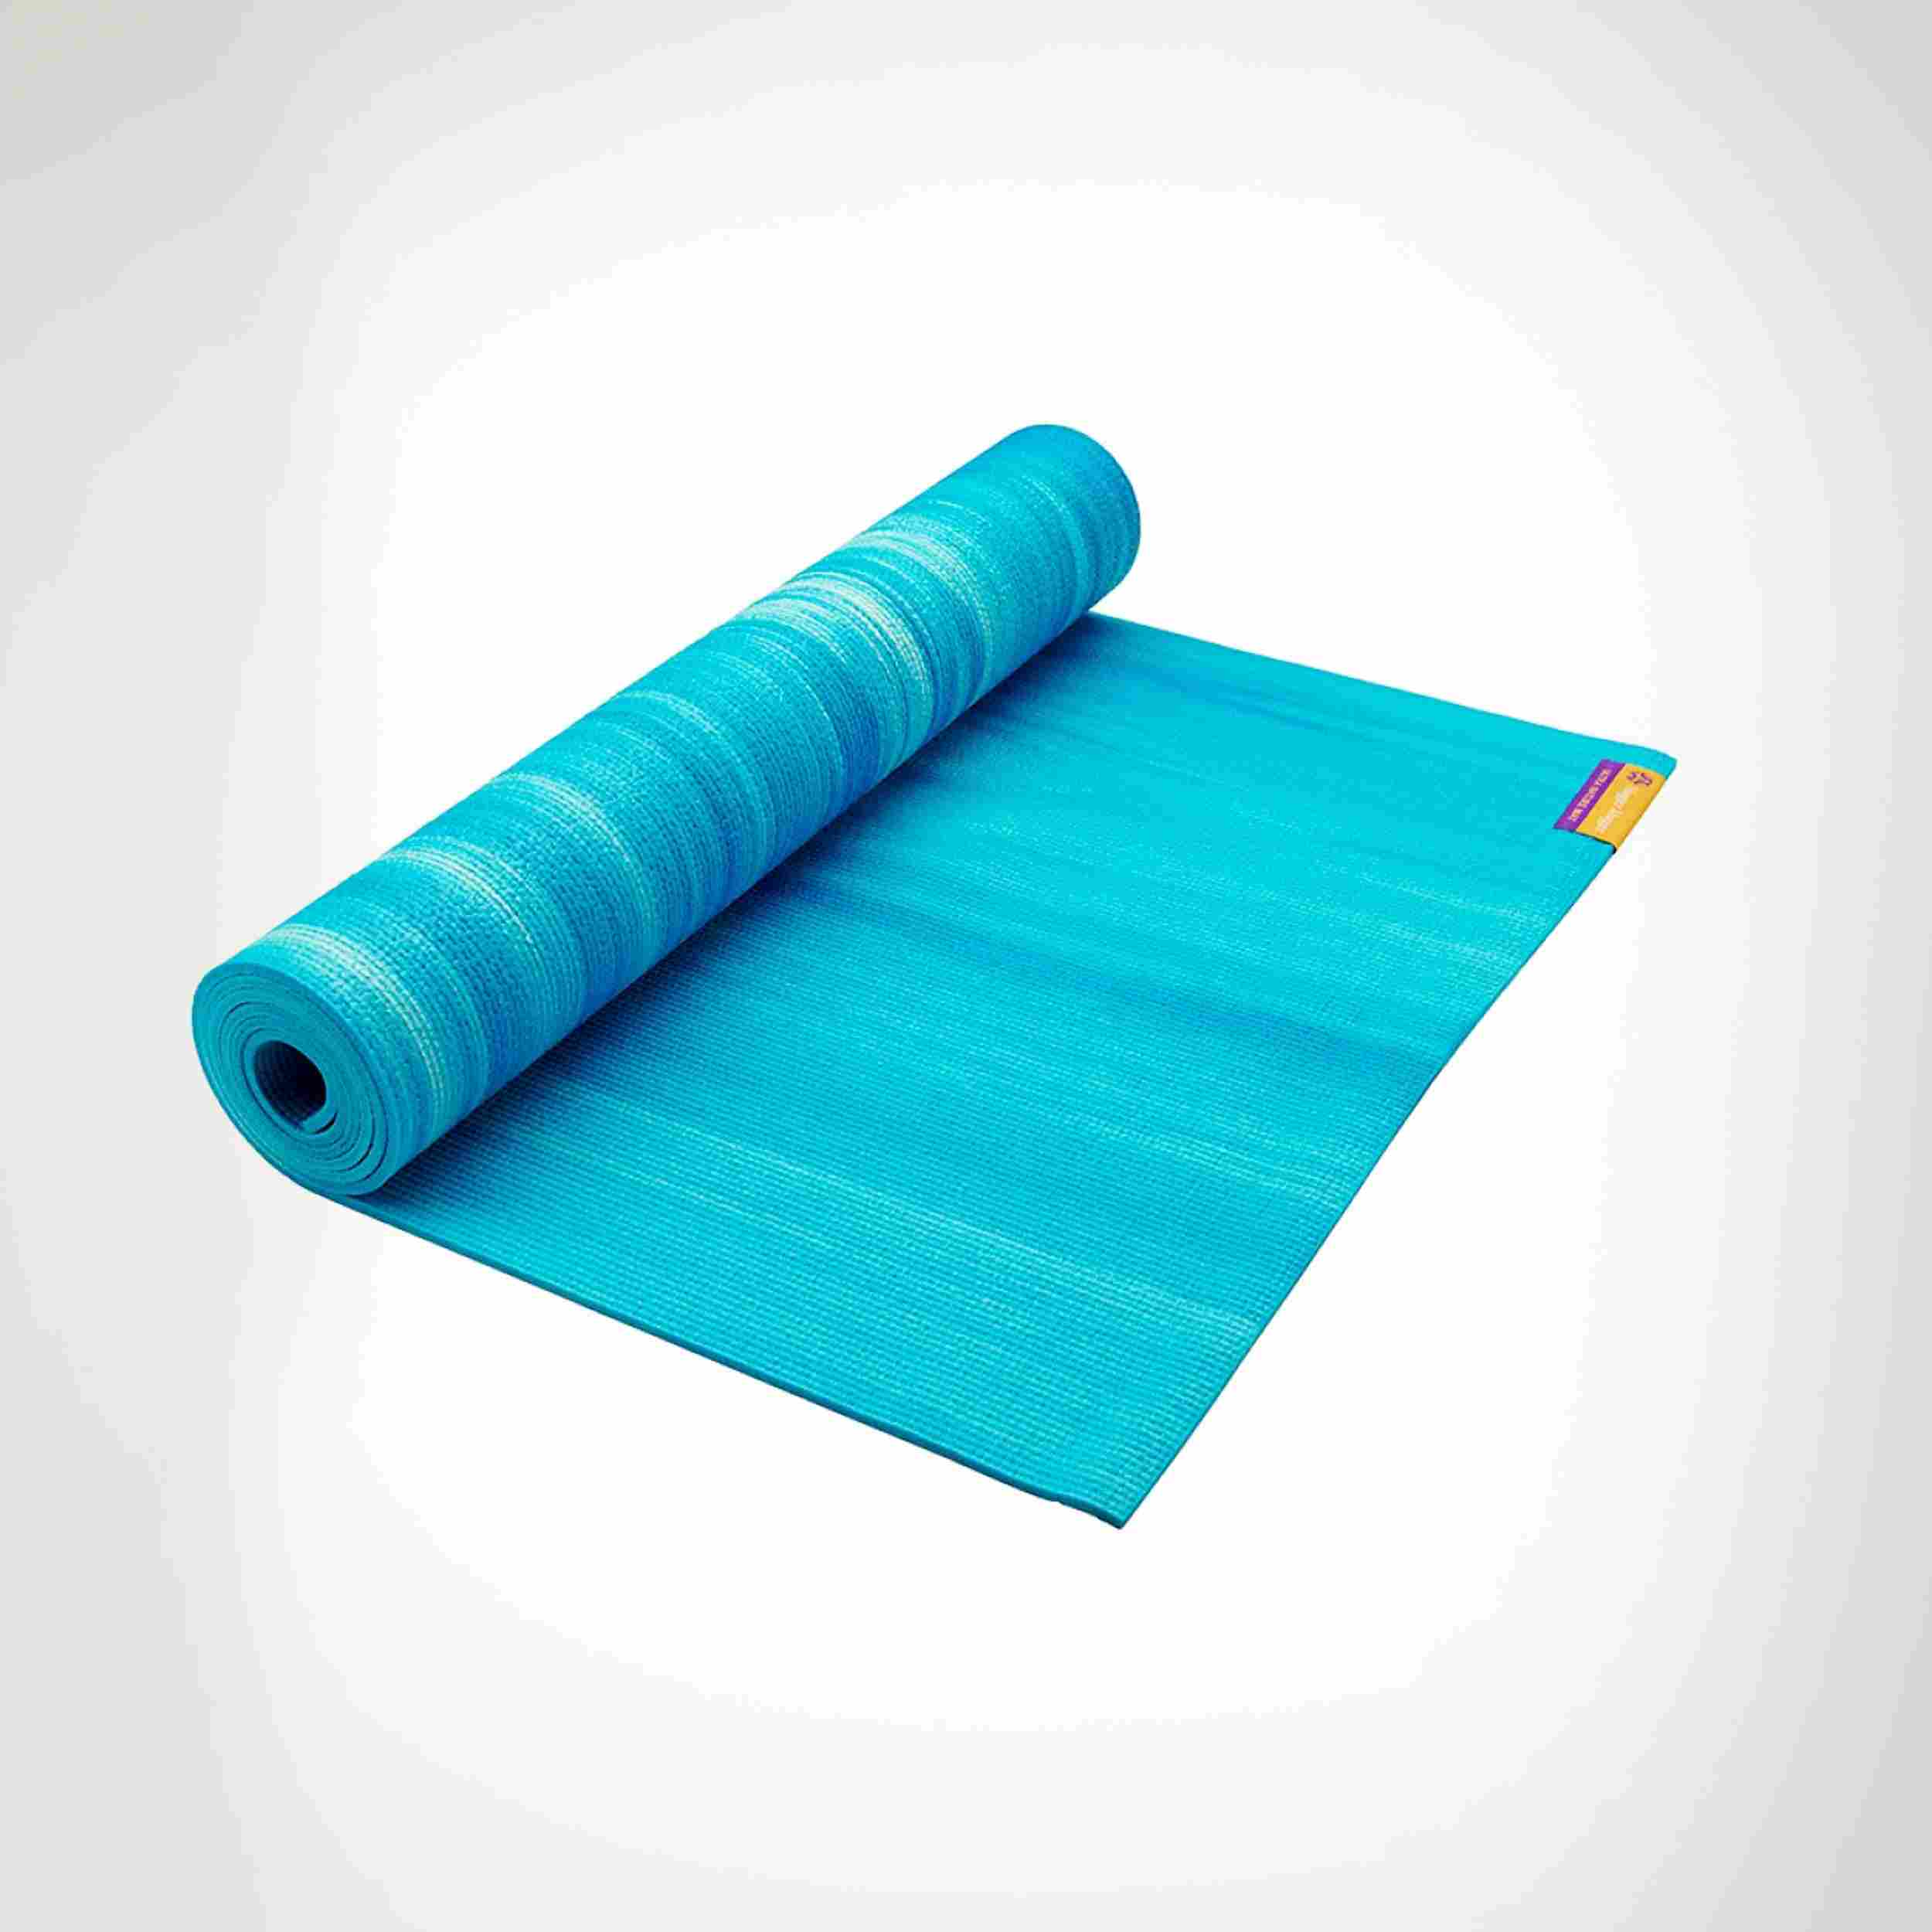 https://www.fisioastur.com/wp-content/uploads/2016/05/product-yoga-mat-blue-with-texture.jpg